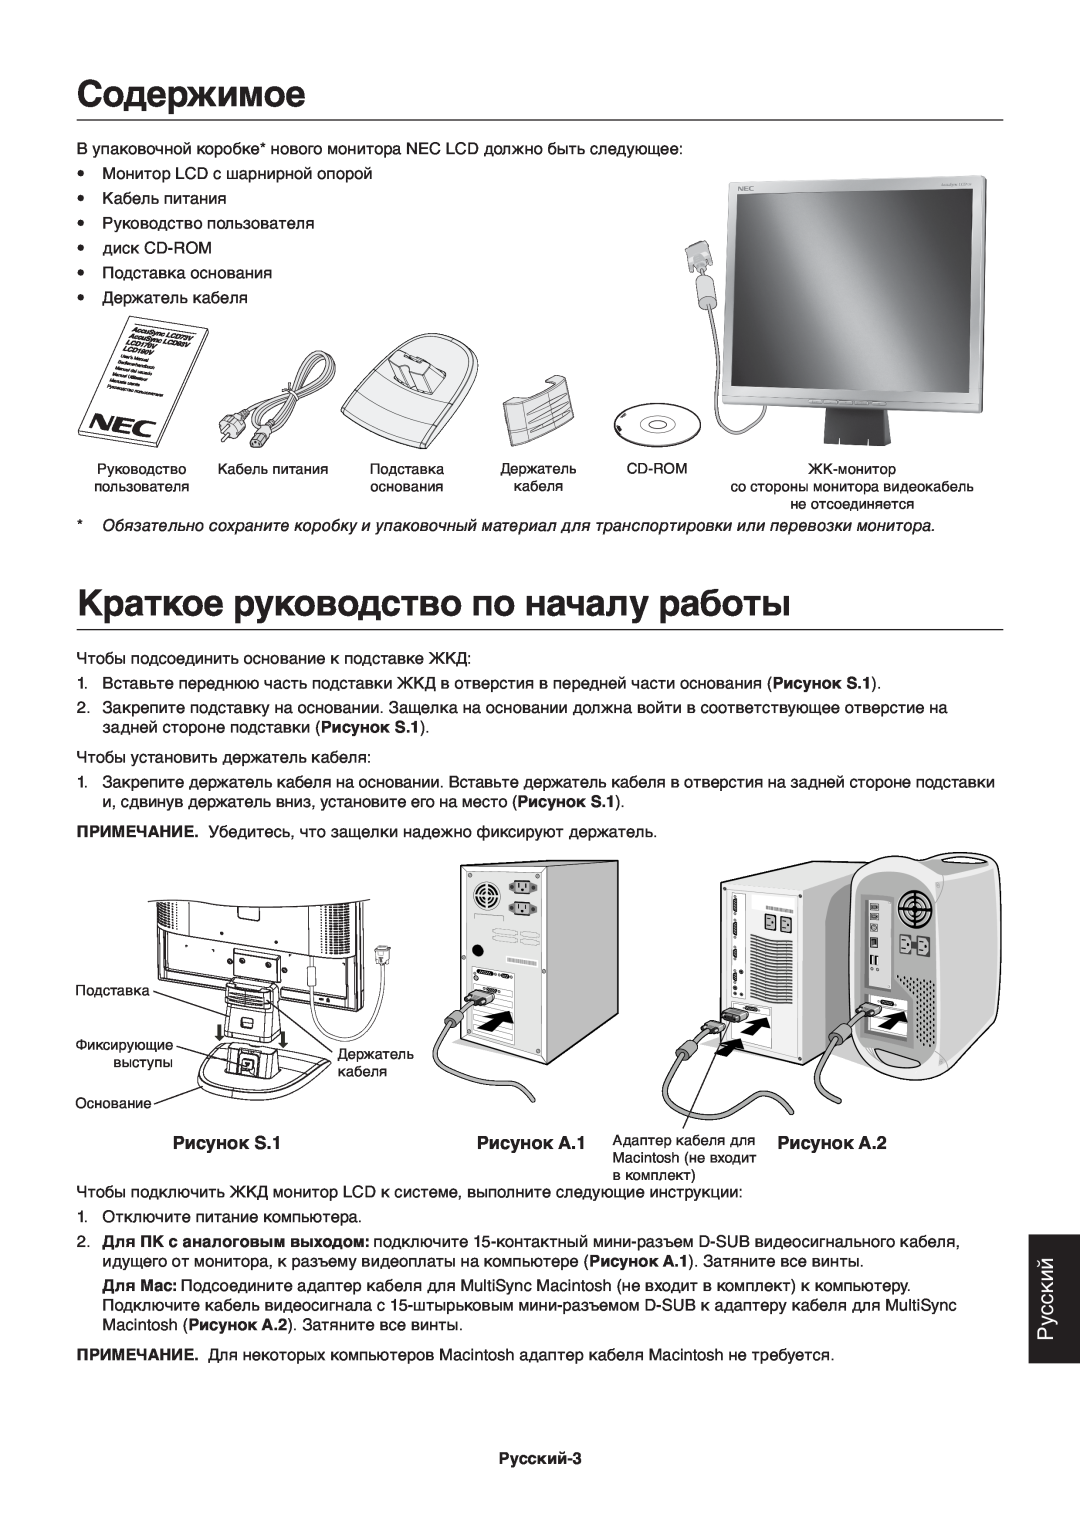 NEC ACCUSYNC LCD73V, ACCUSYNC LCD93V manual Содержимое, Краткое руководство по началу работы, Рисунок S.1, Русский-3 